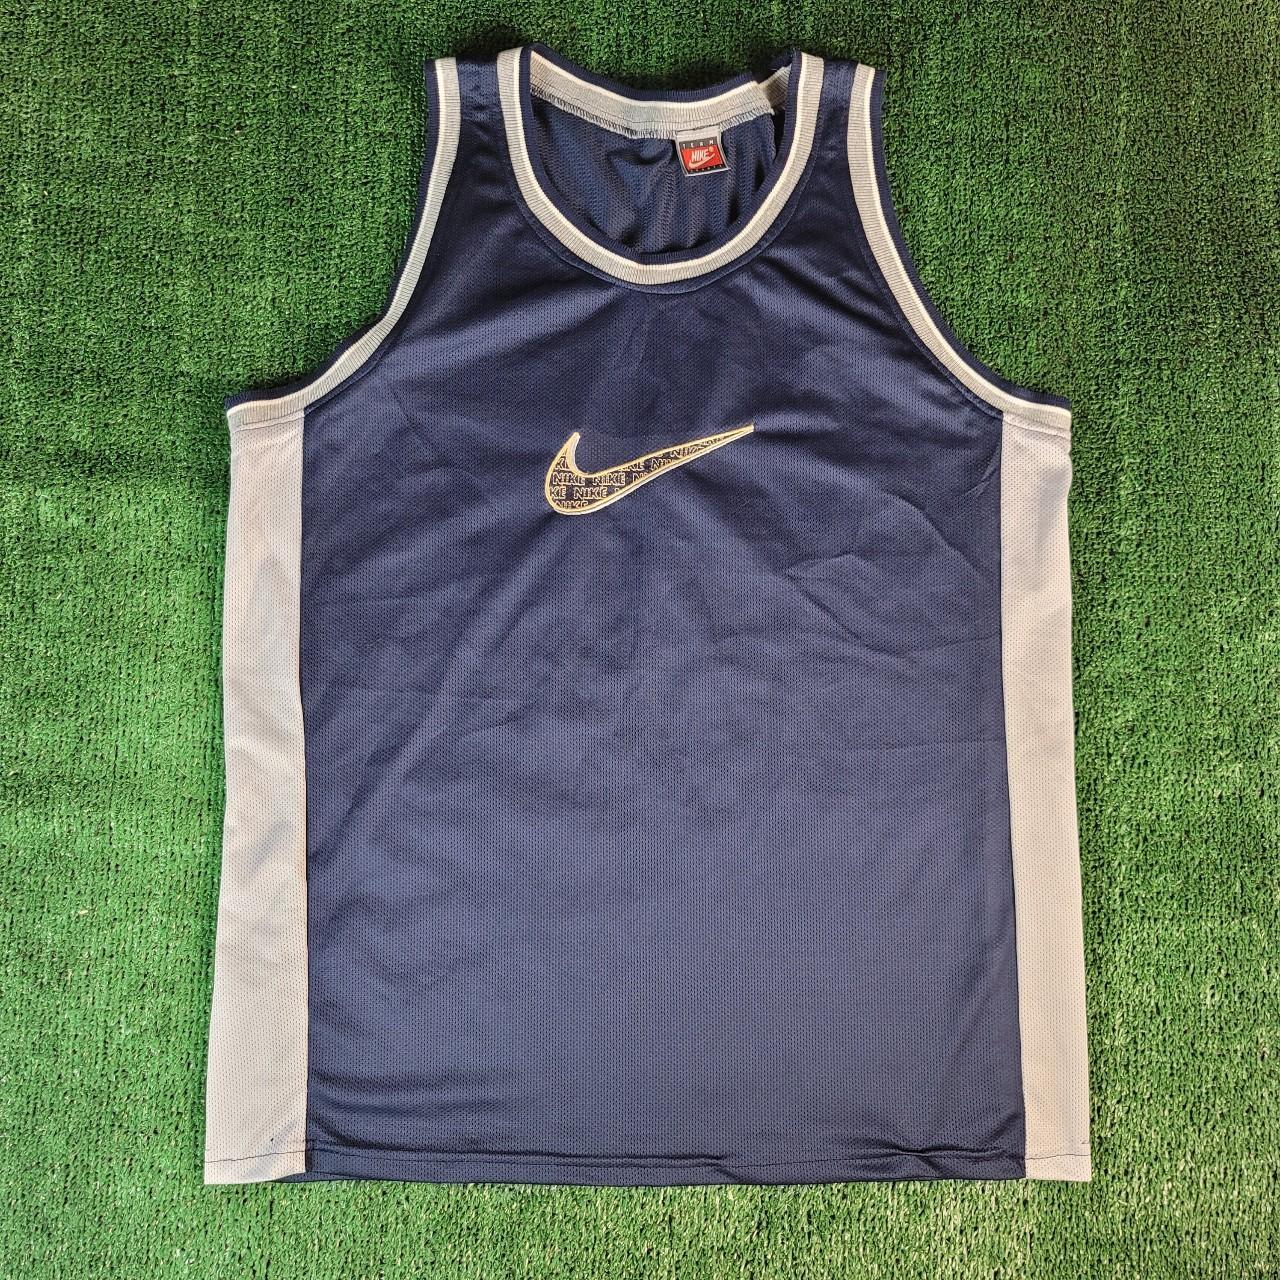 Vintage center swoosh blank Nike basketball jersey - Depop